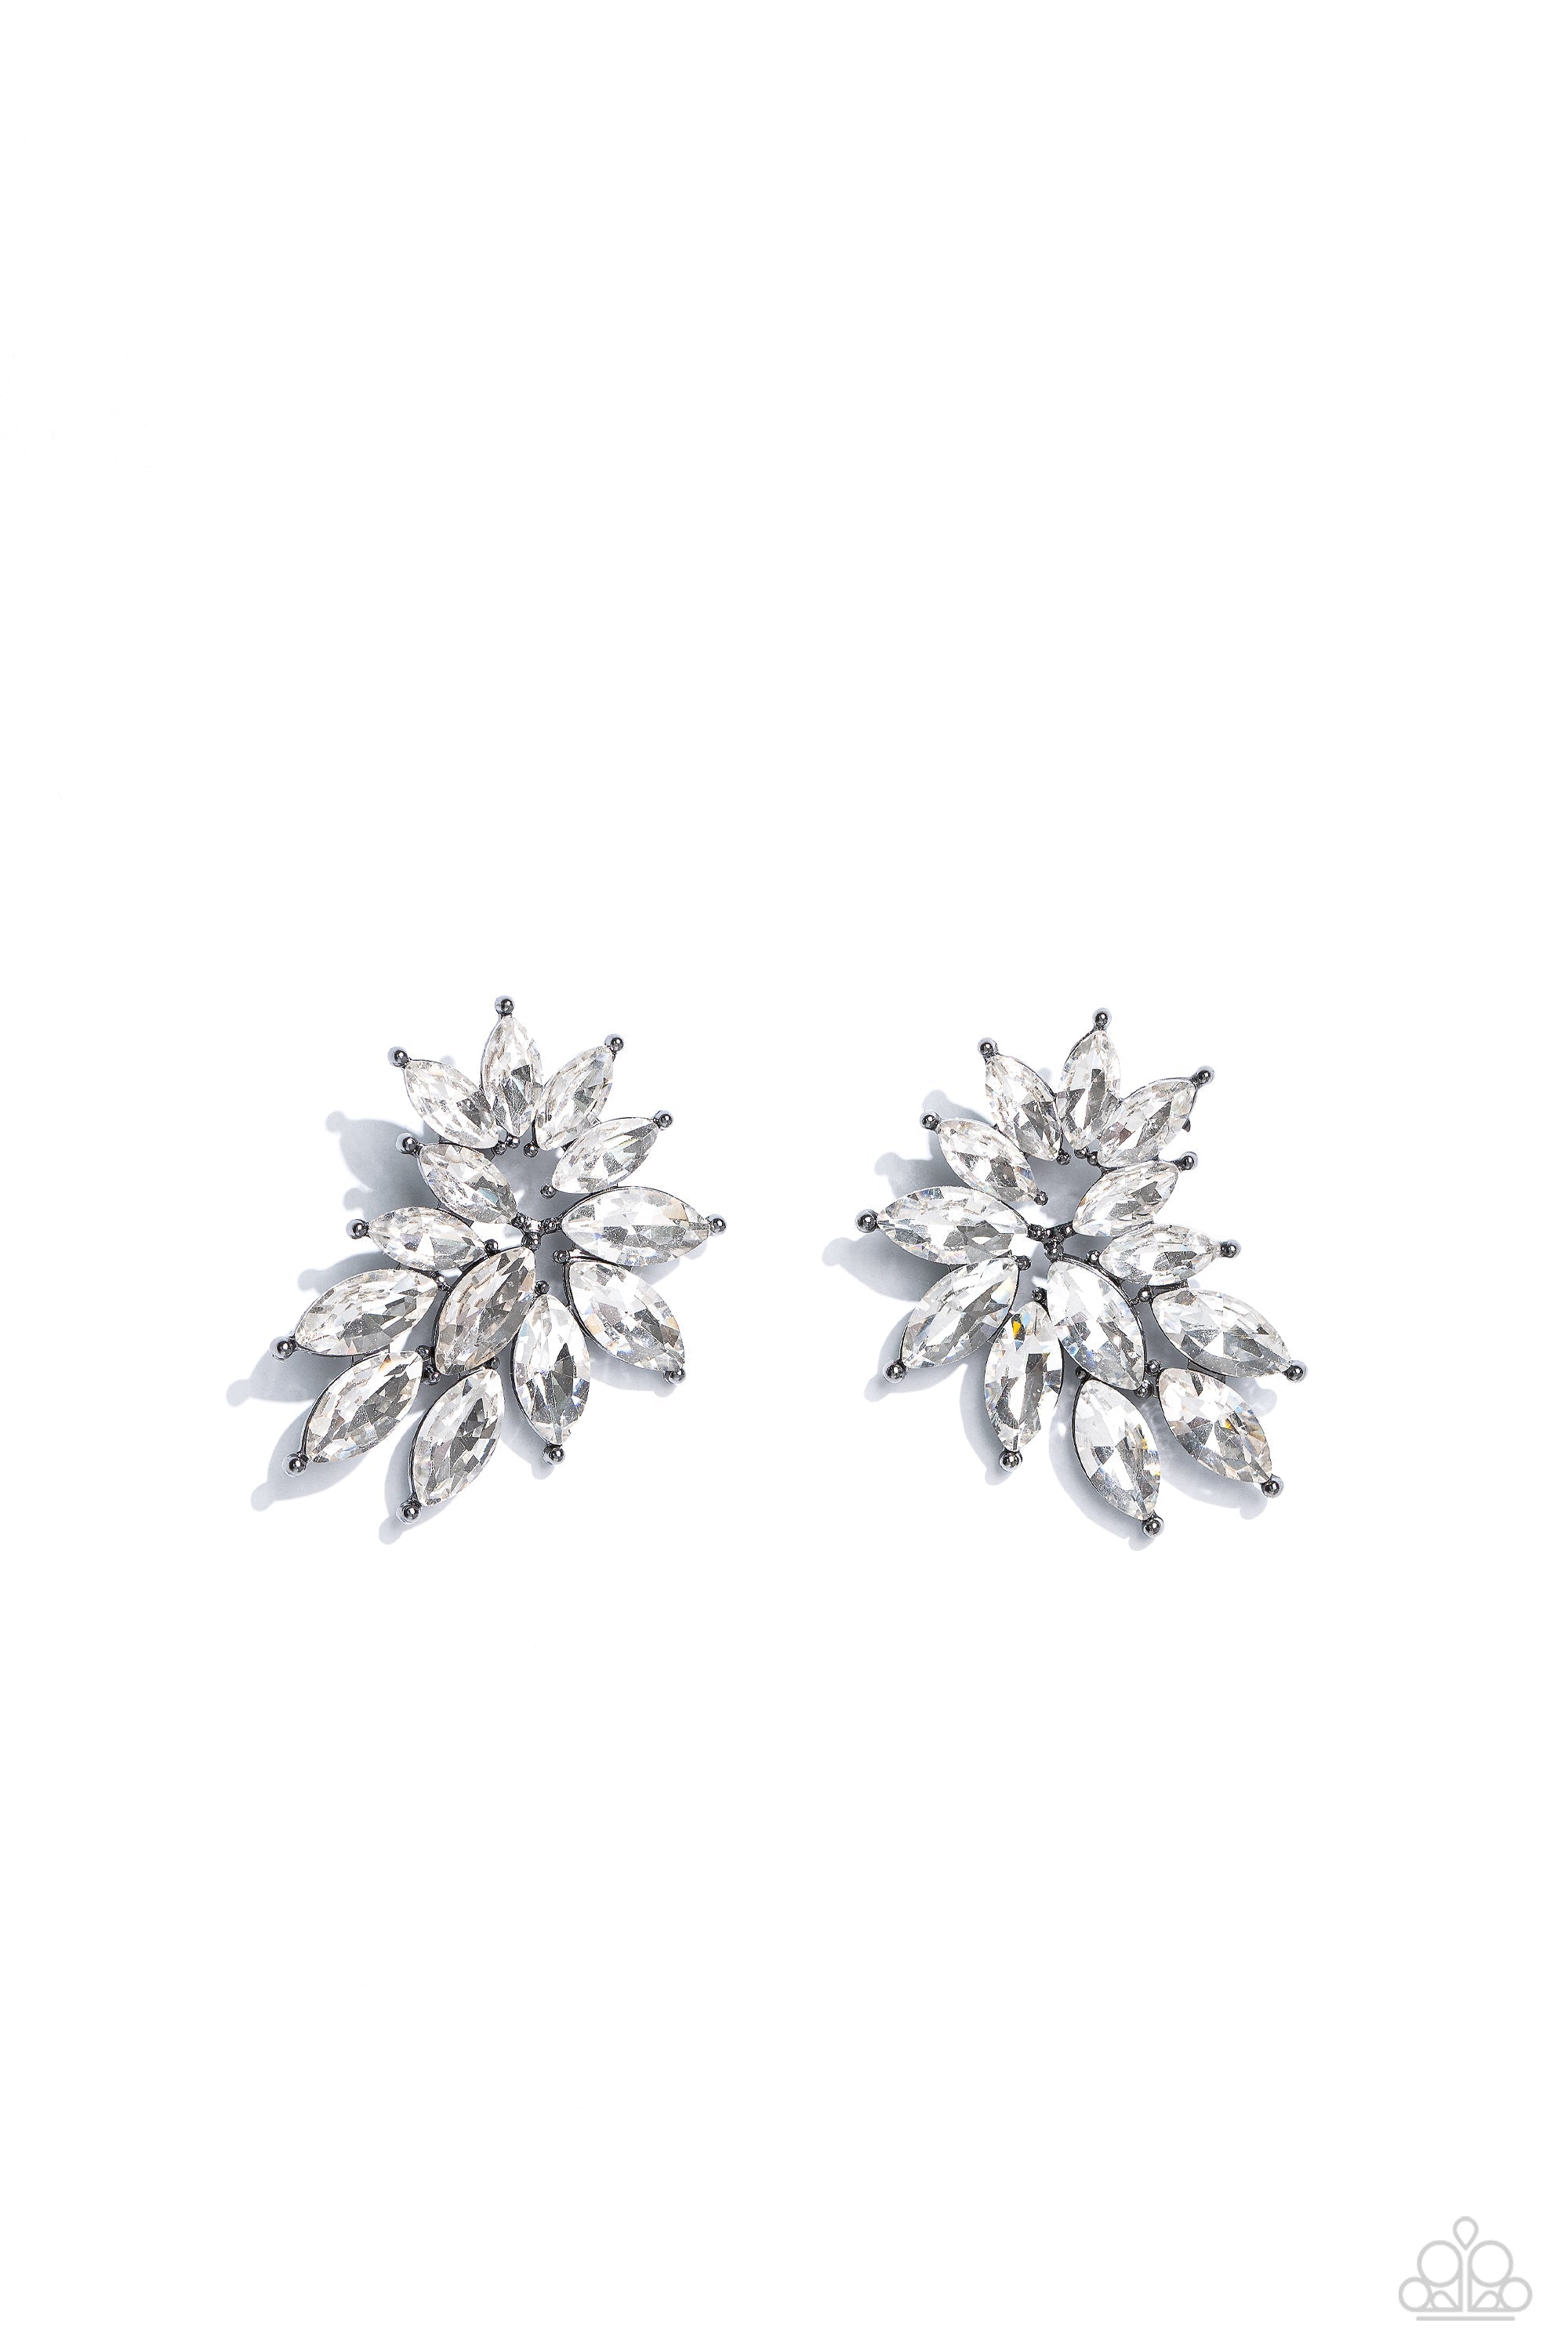 Fire Hazard Gunmetal Black & White Rhinestone Earrings - Paparazzi Accessories- lightbox - CarasShop.com - $5 Jewelry by Cara Jewels